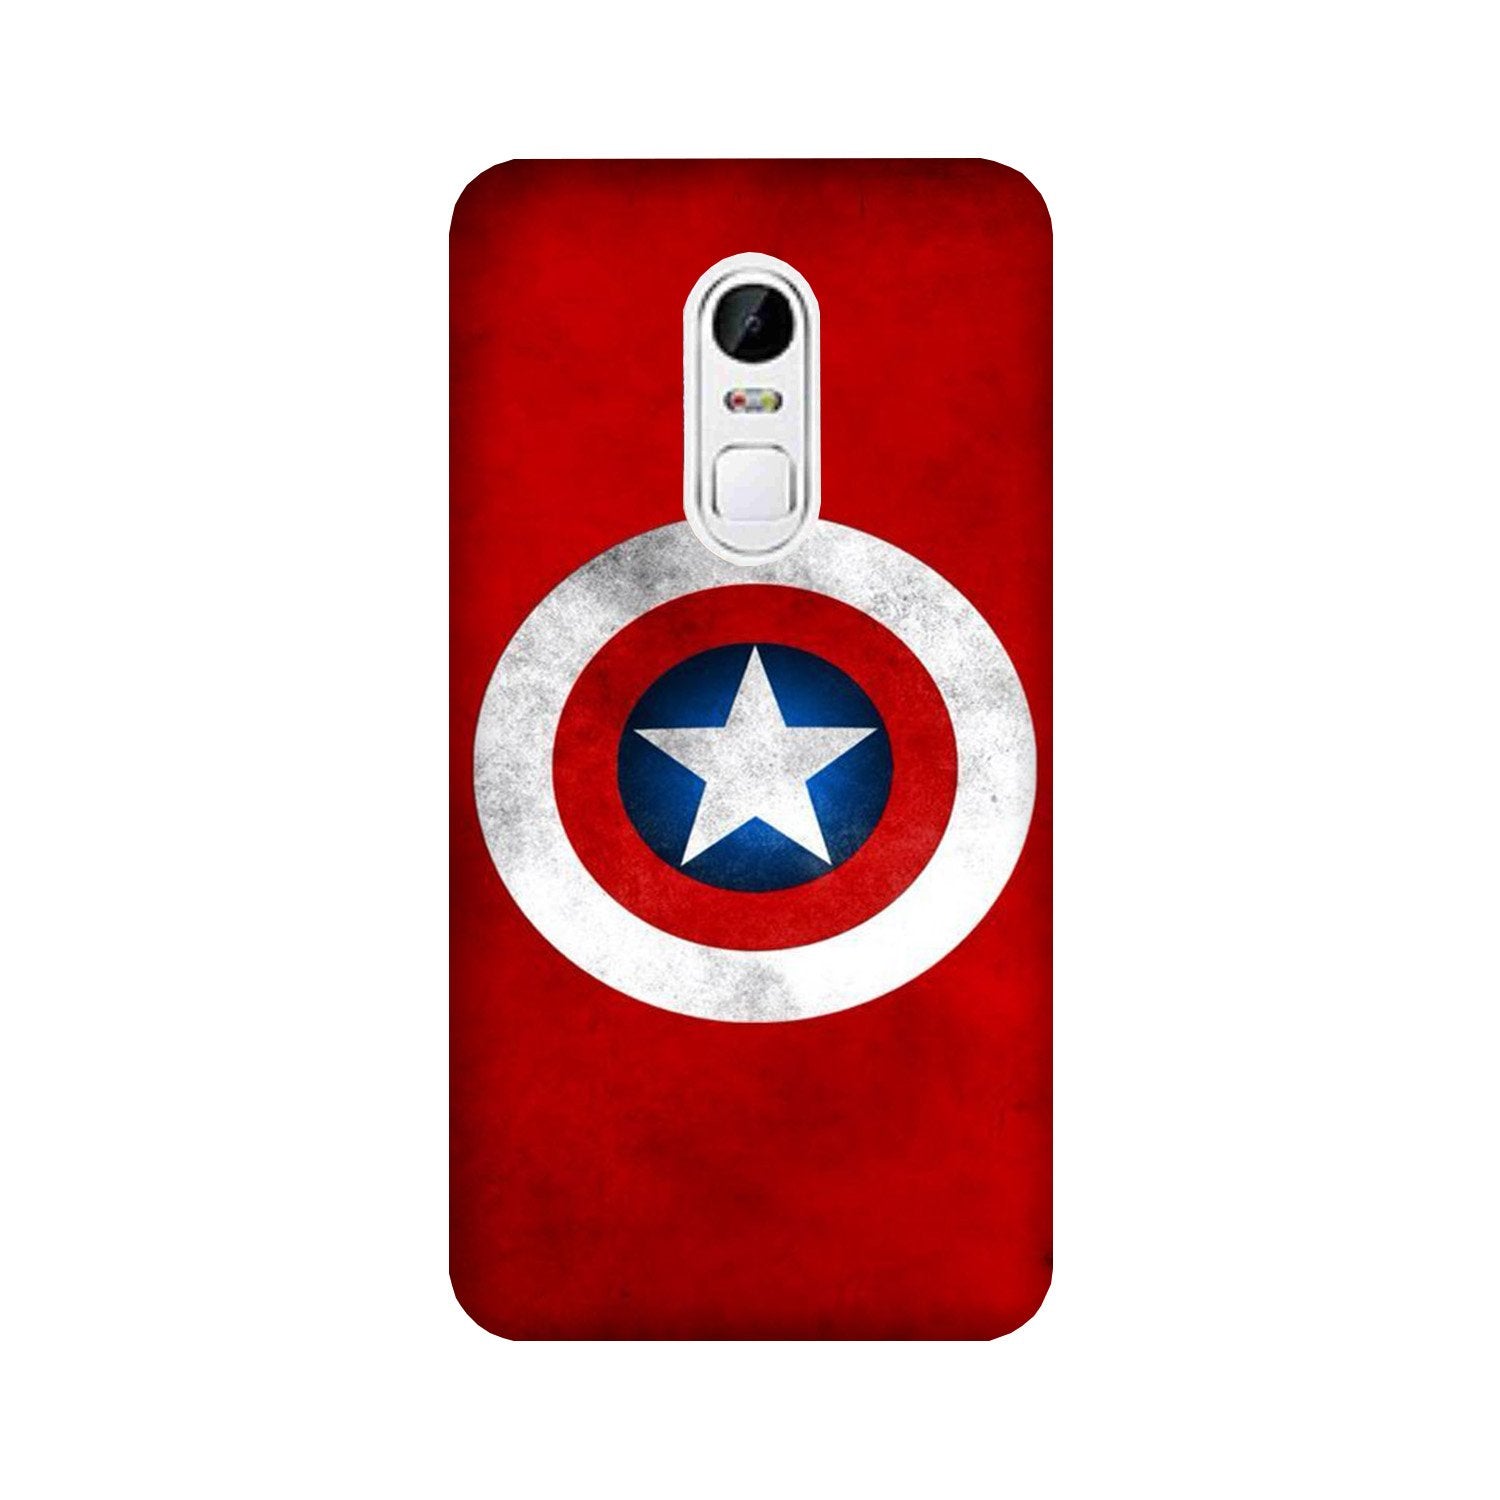 Captain America Case for Lenovo Vibe X3 (Design No. 249)